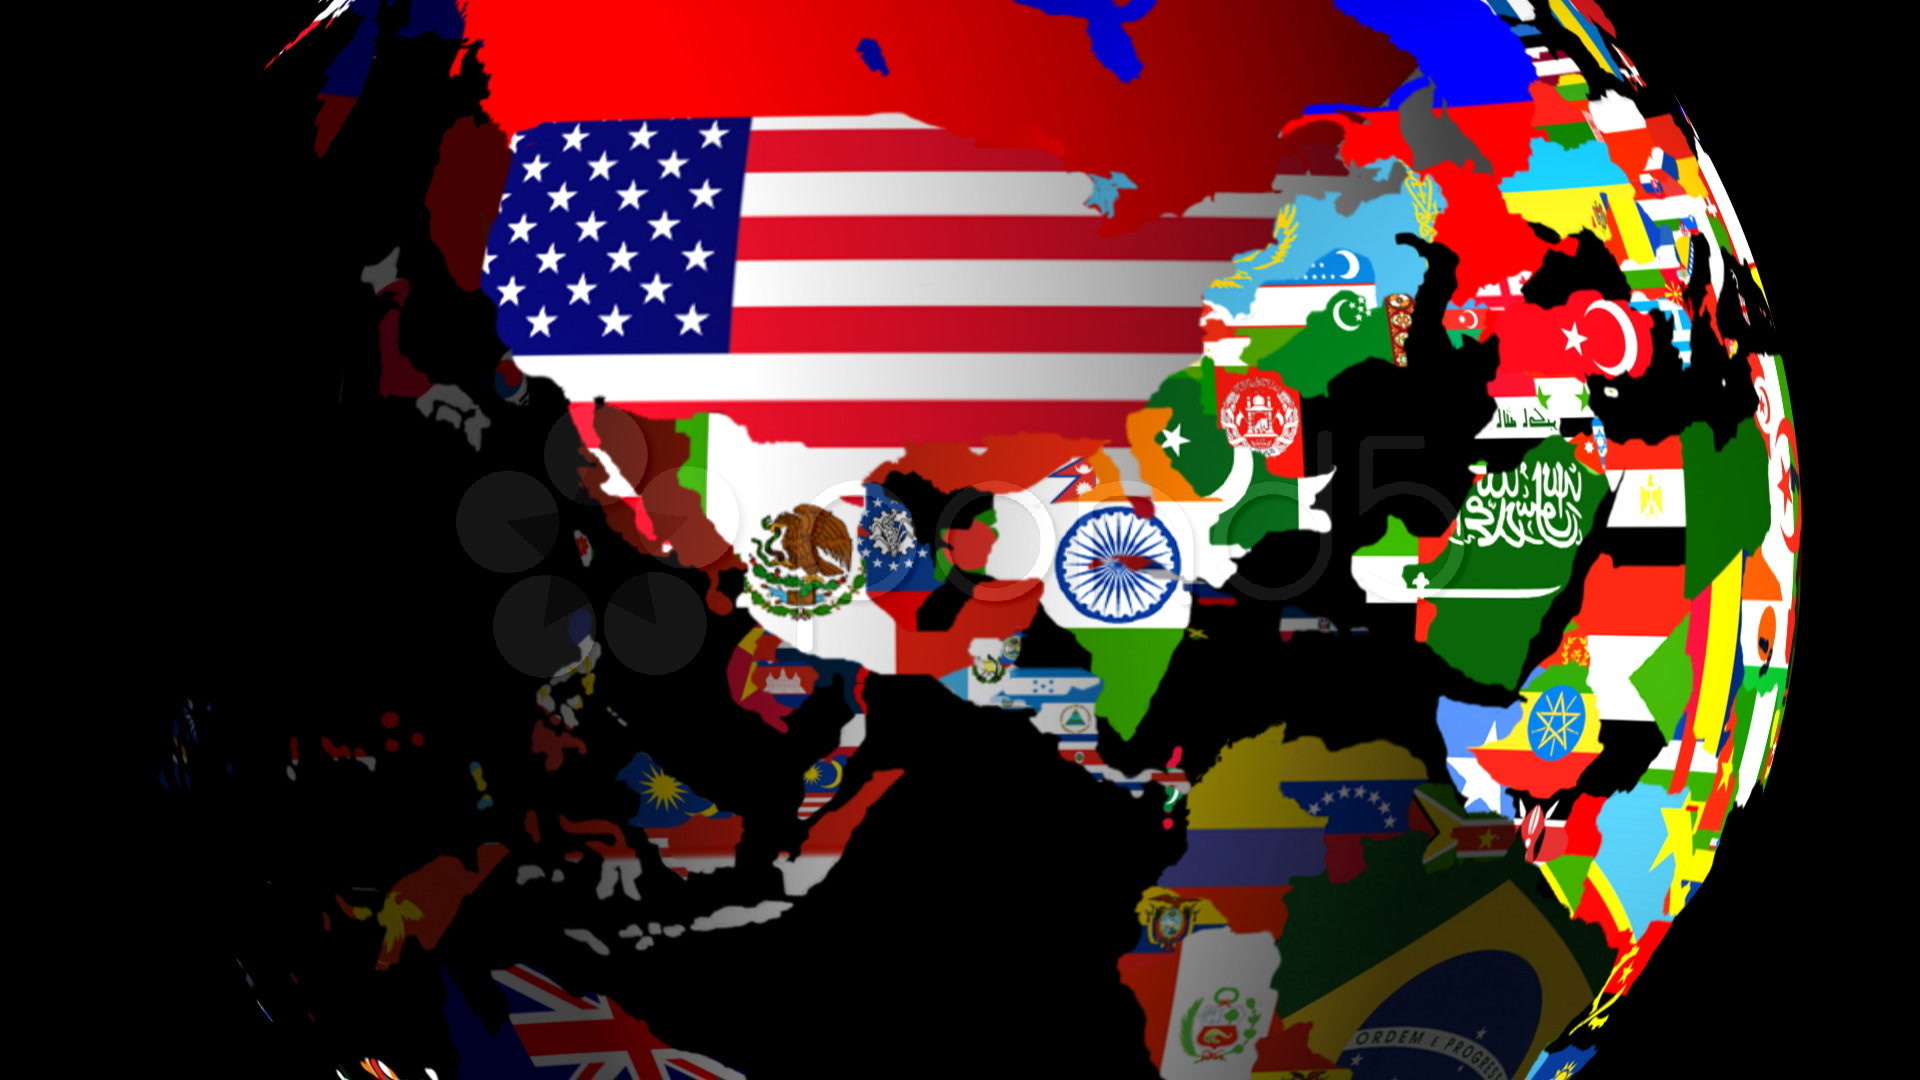 International Flags, World flags wallpaper, Ethnically diverse, Vibrant colors, 1920x1080 Full HD Desktop